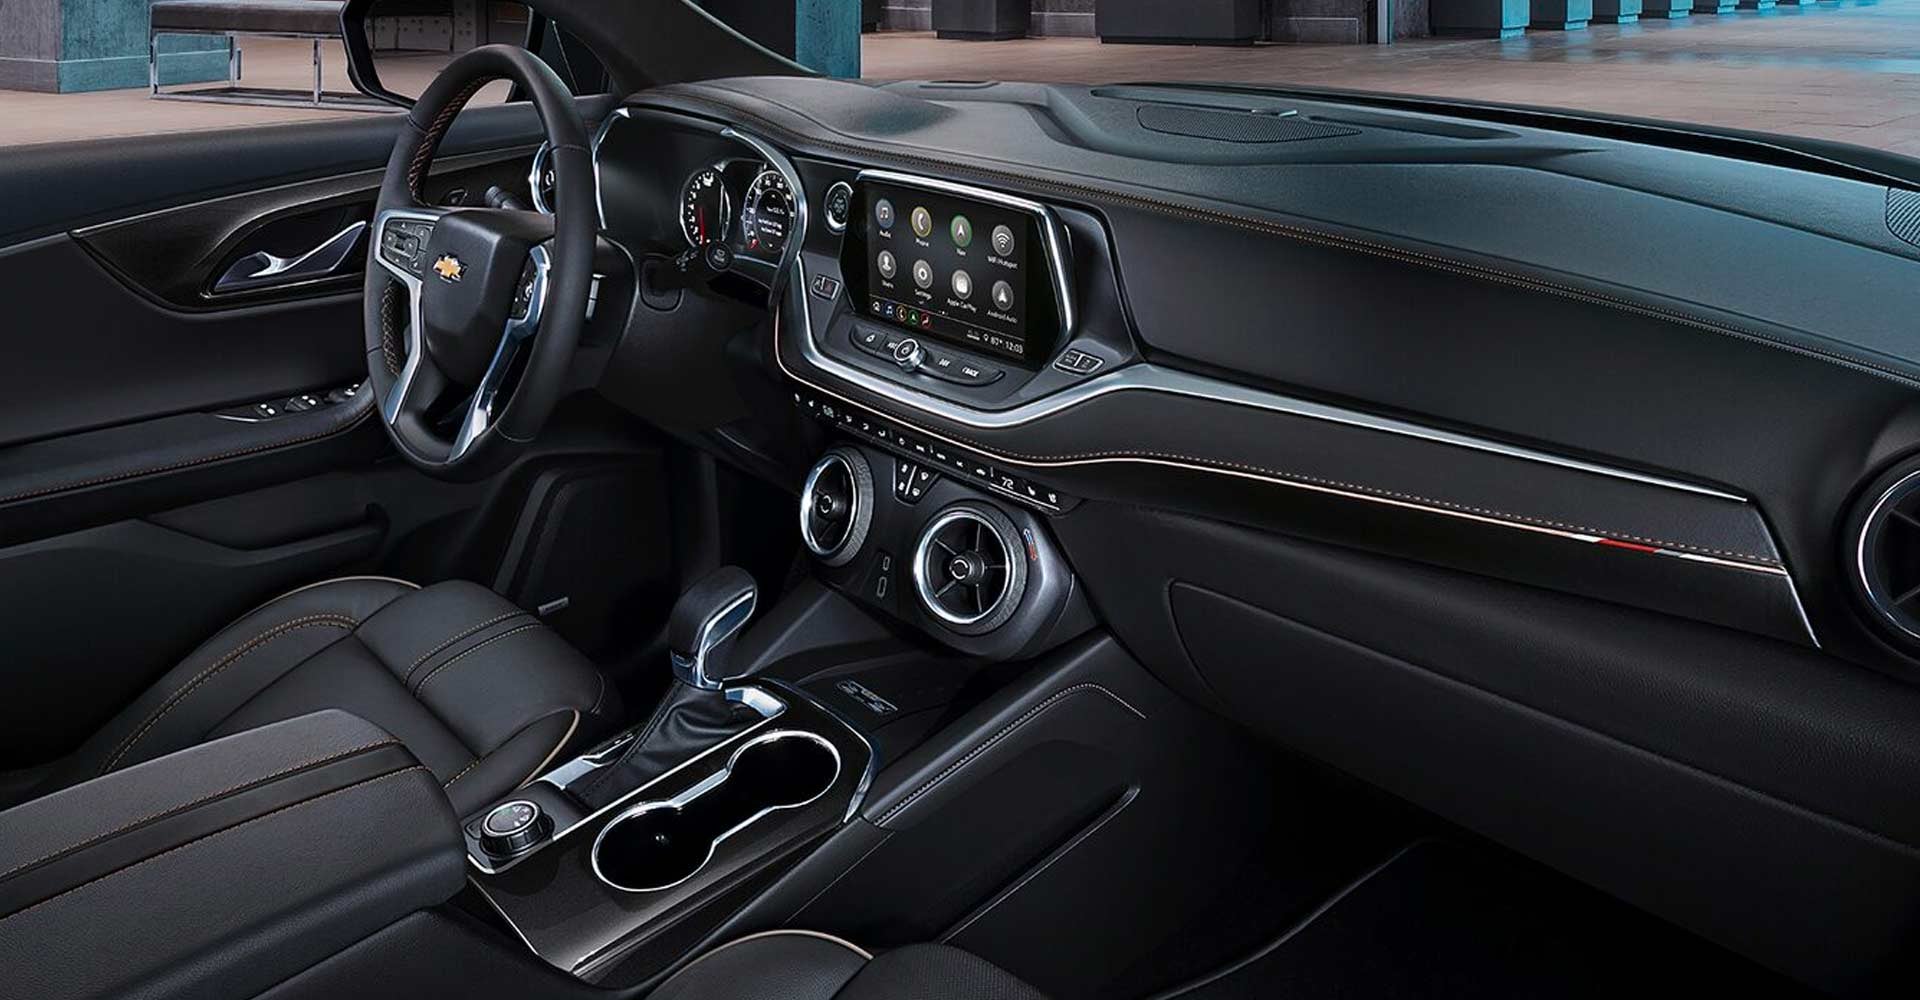 2021 Chevy Blazer interior